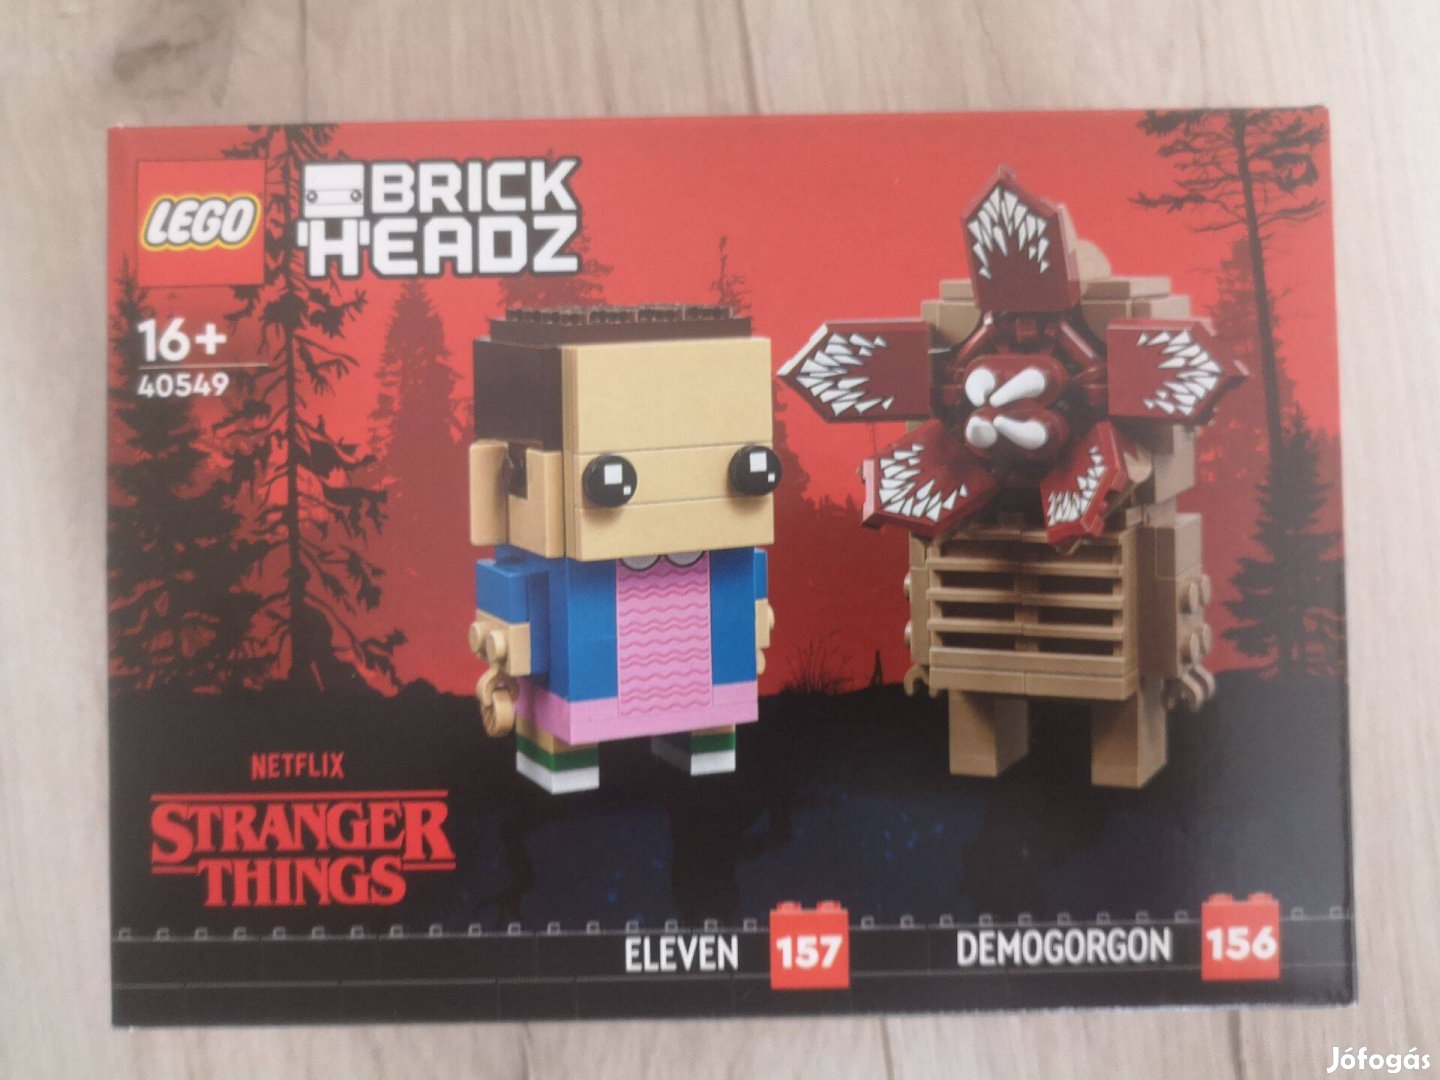 LEGO Brickheadz - Demogorgon és Eleven (40549)